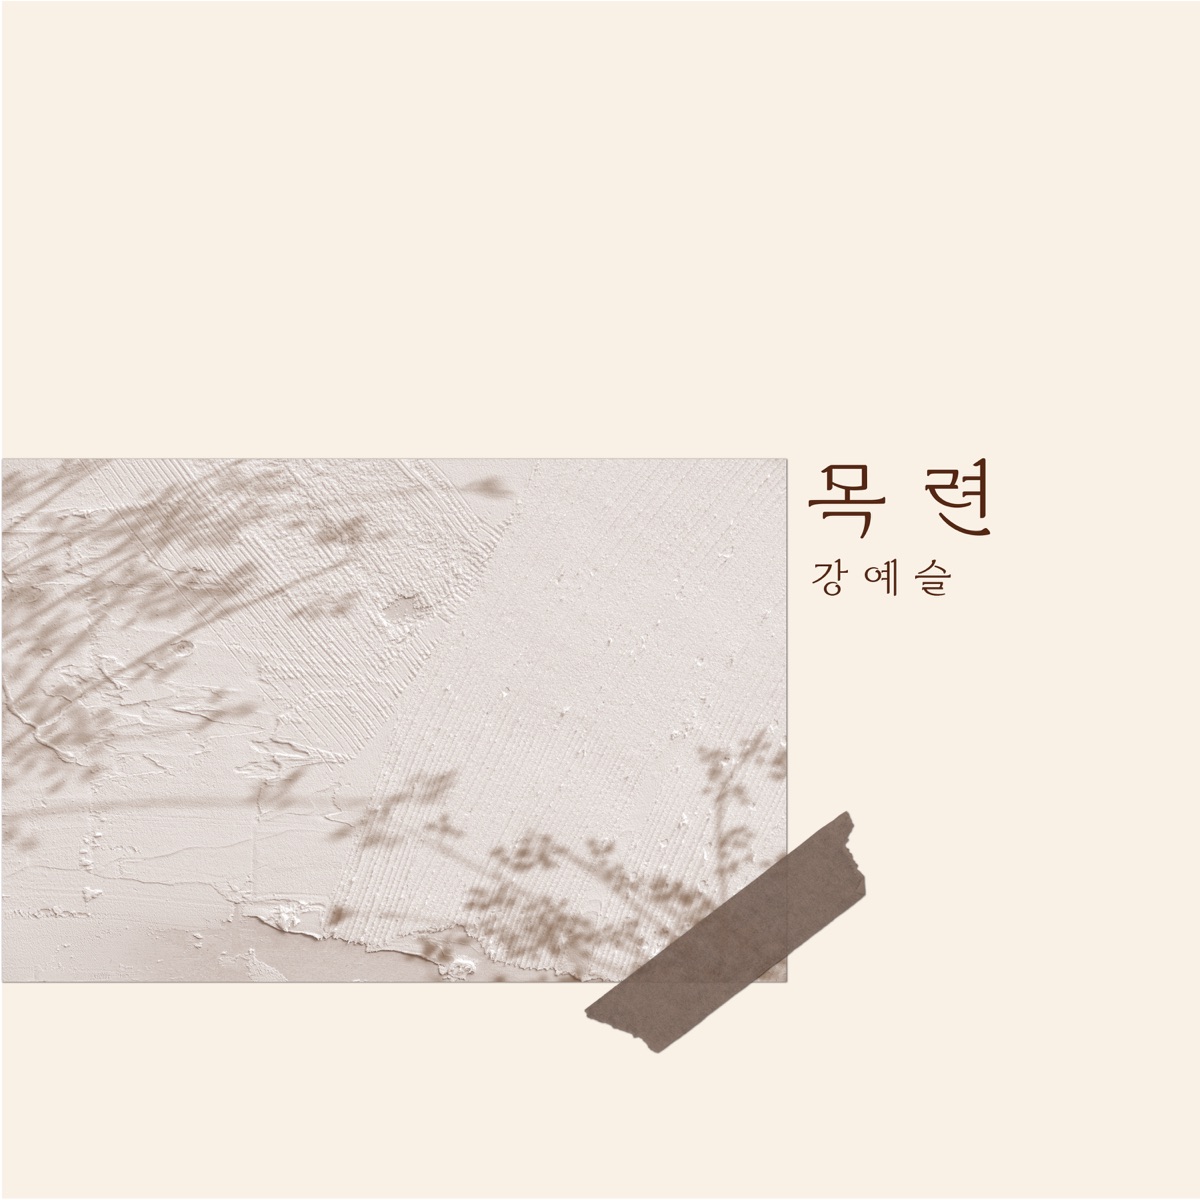 Kang Yeseul – Magnolia – Single